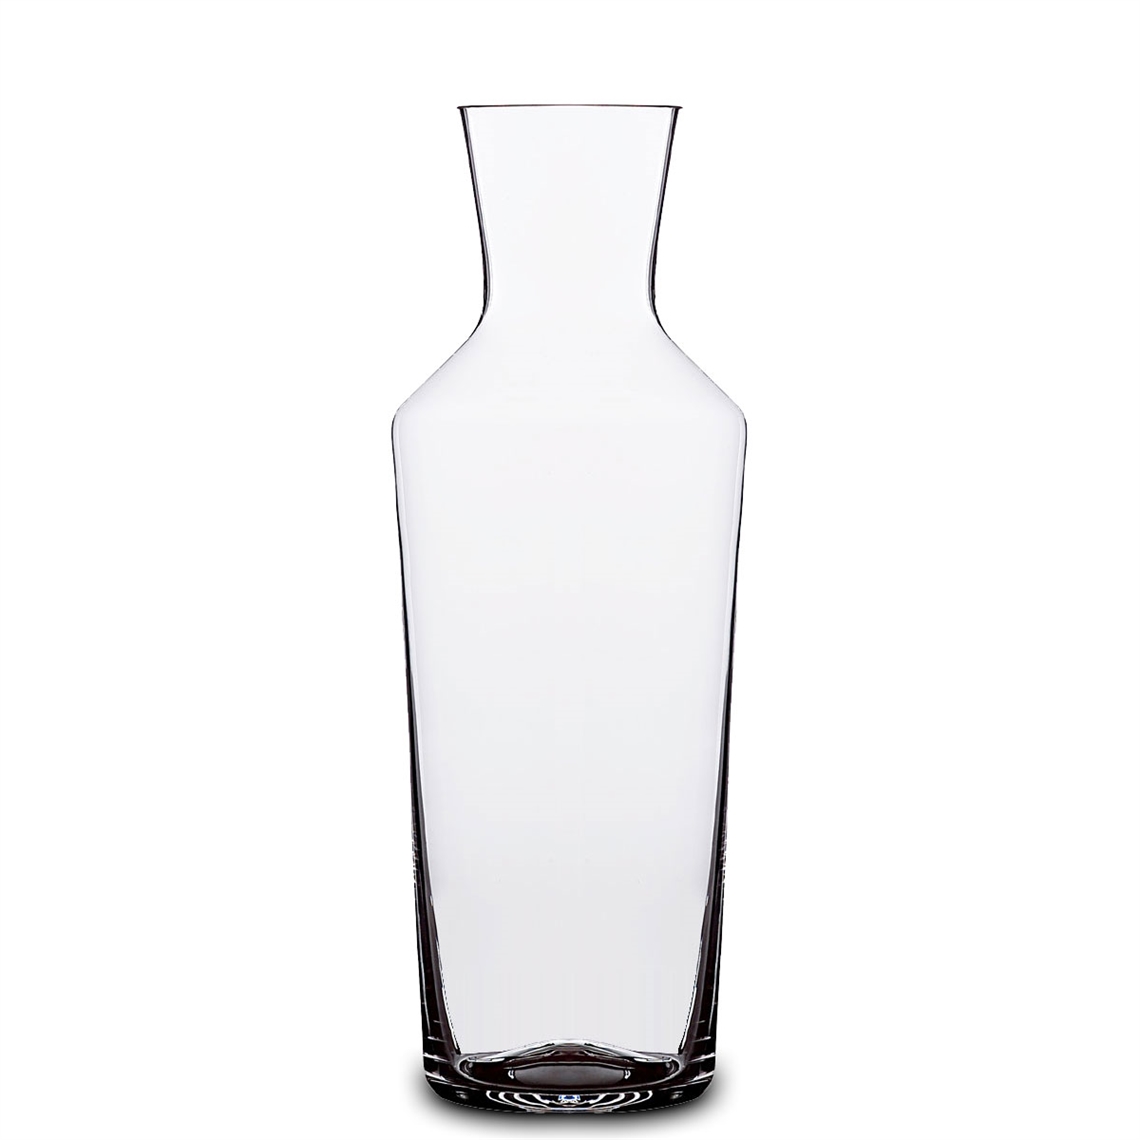 Zalto Denk Art Crystal Wine / Water Carafe 820ml - Carafe No.75